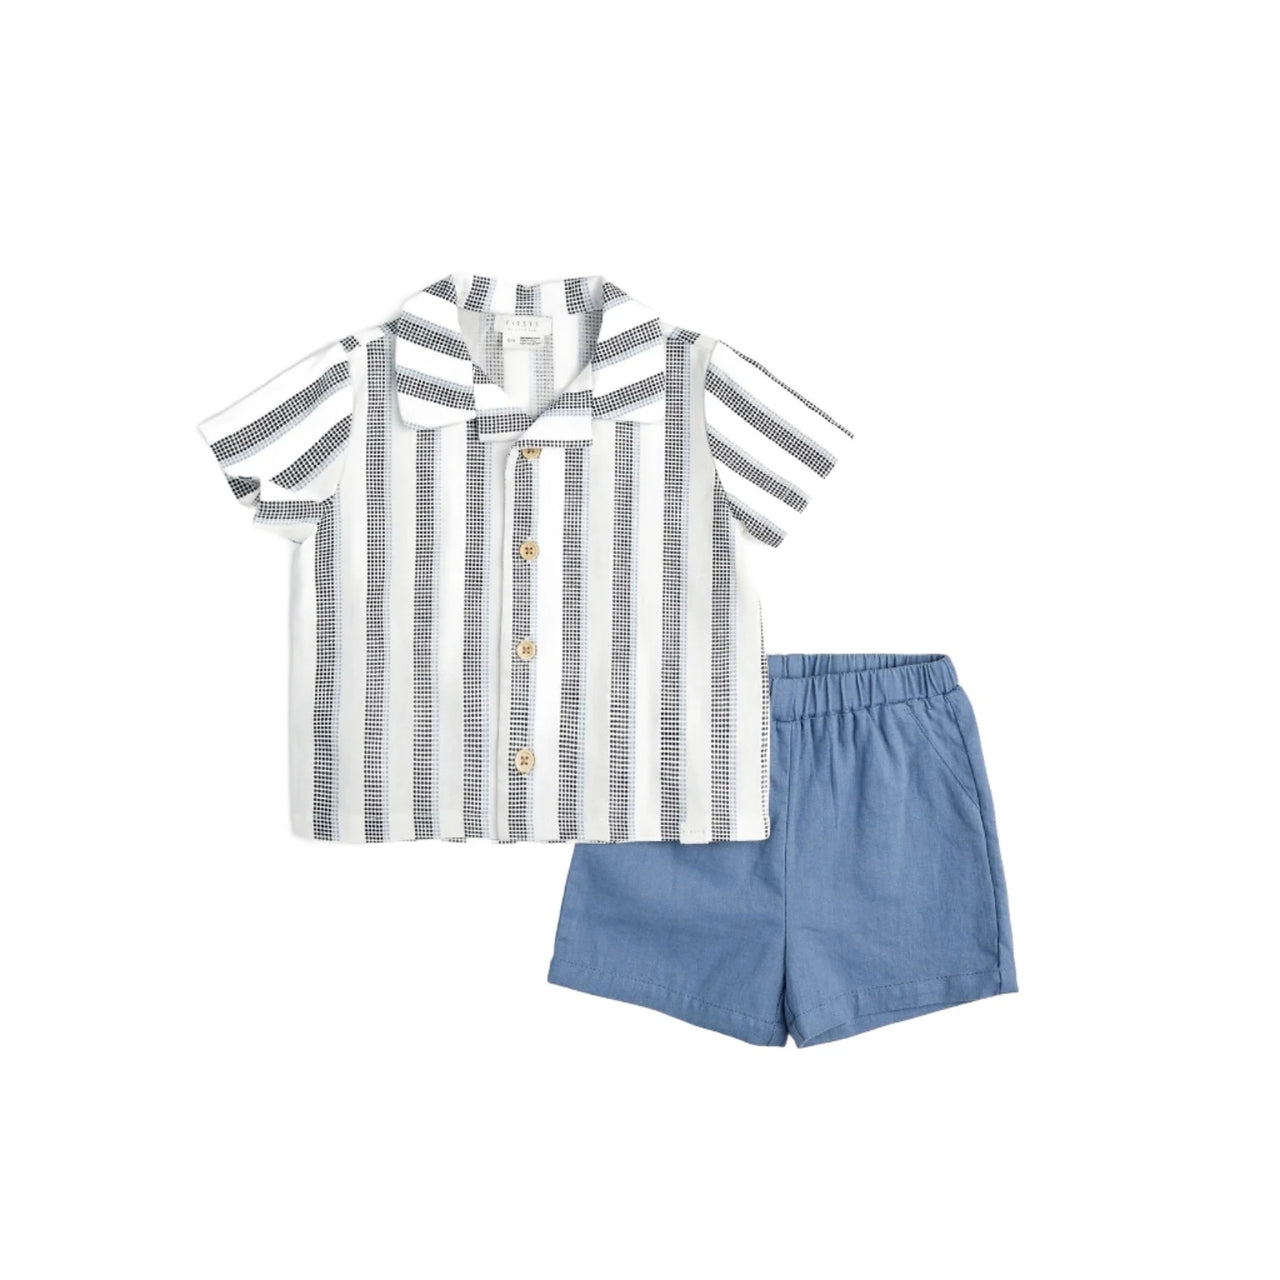 Navy 2pc Set - Shirt & Shorts